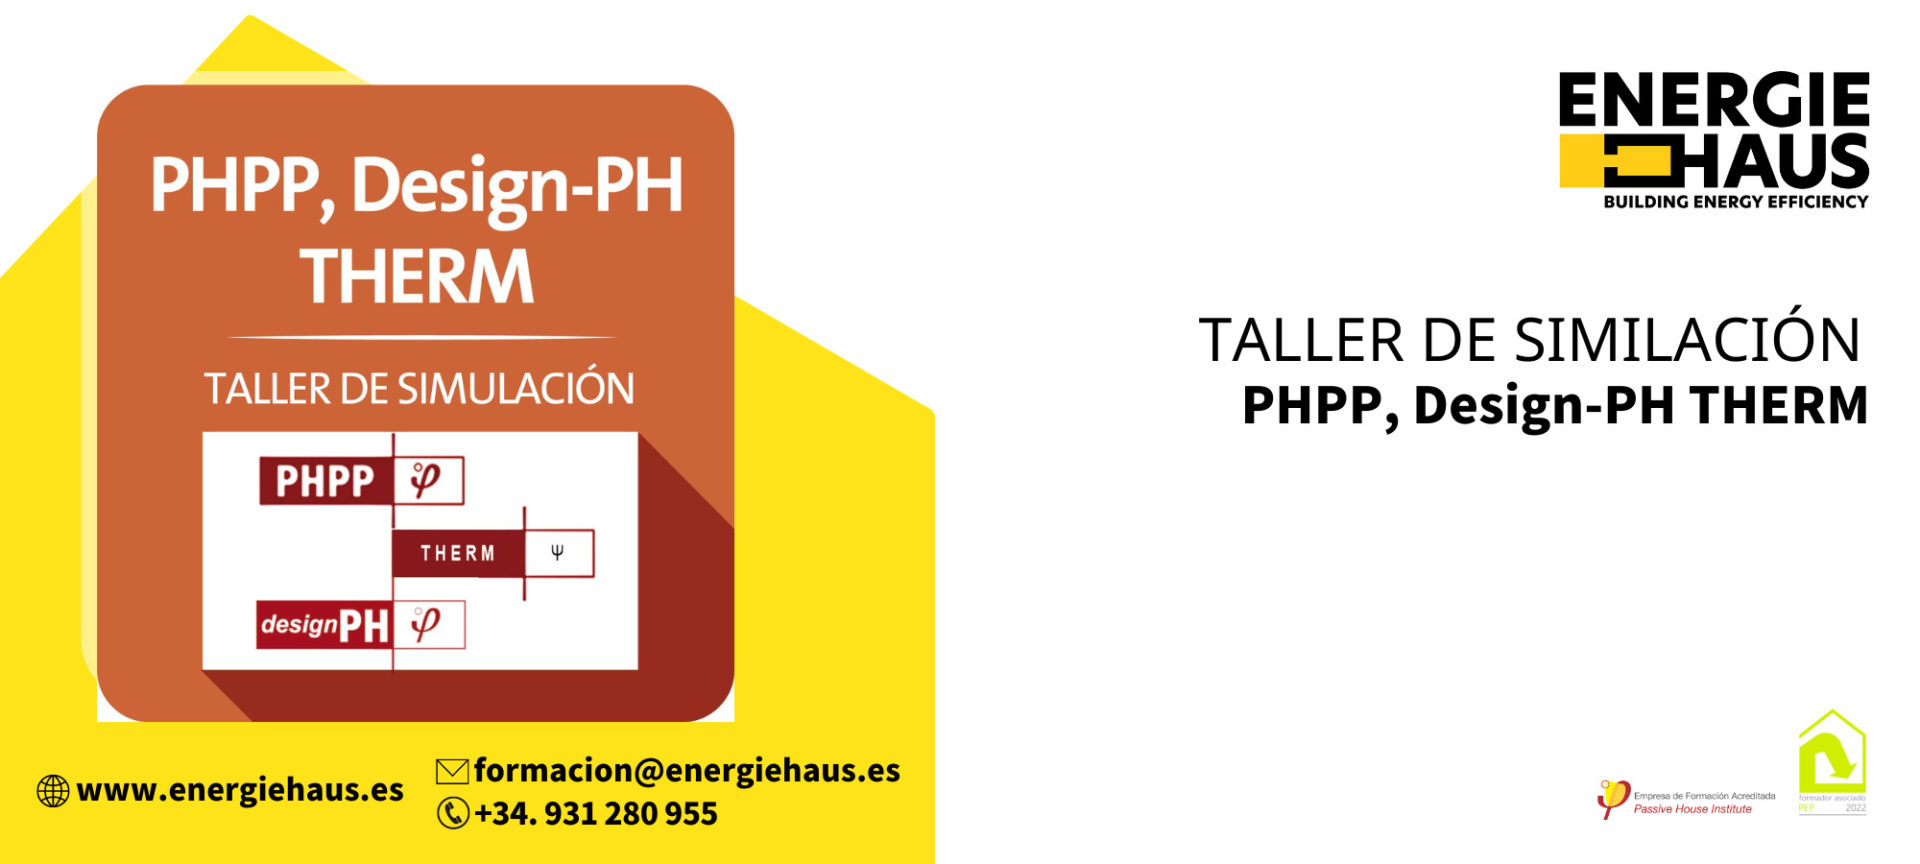 Curso Taller PHPP/Design-PH/THERM: Streaming. ENERGIEHAUS